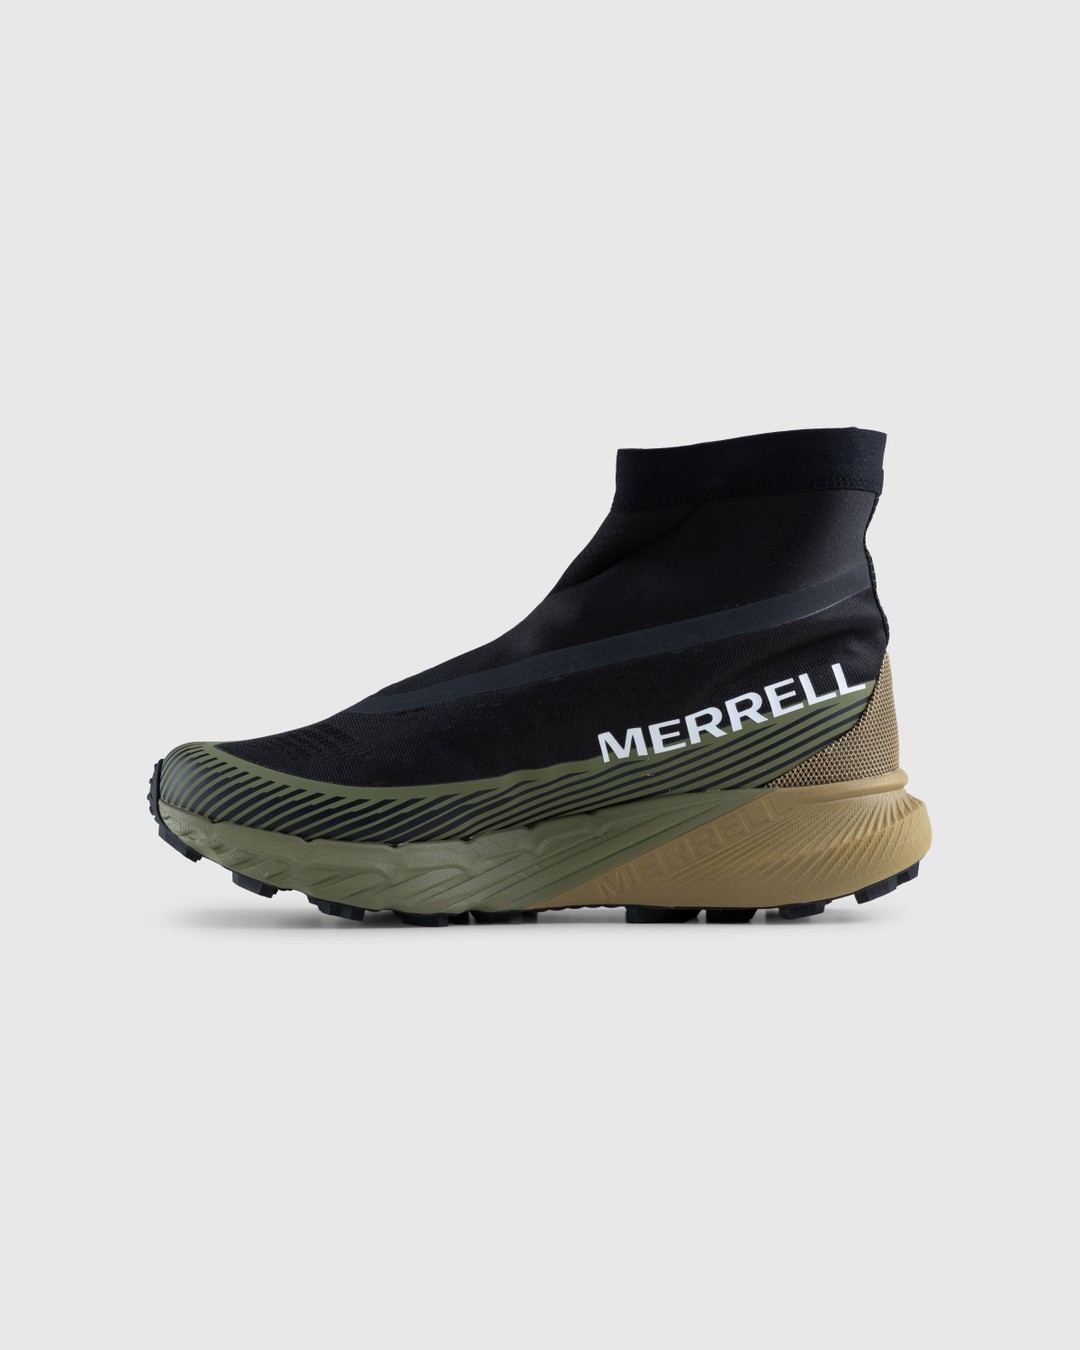 Merrell – Agility Peak 5 Zero GORE-TEX Black/Avocado - Sneakers - Multi - Image 2